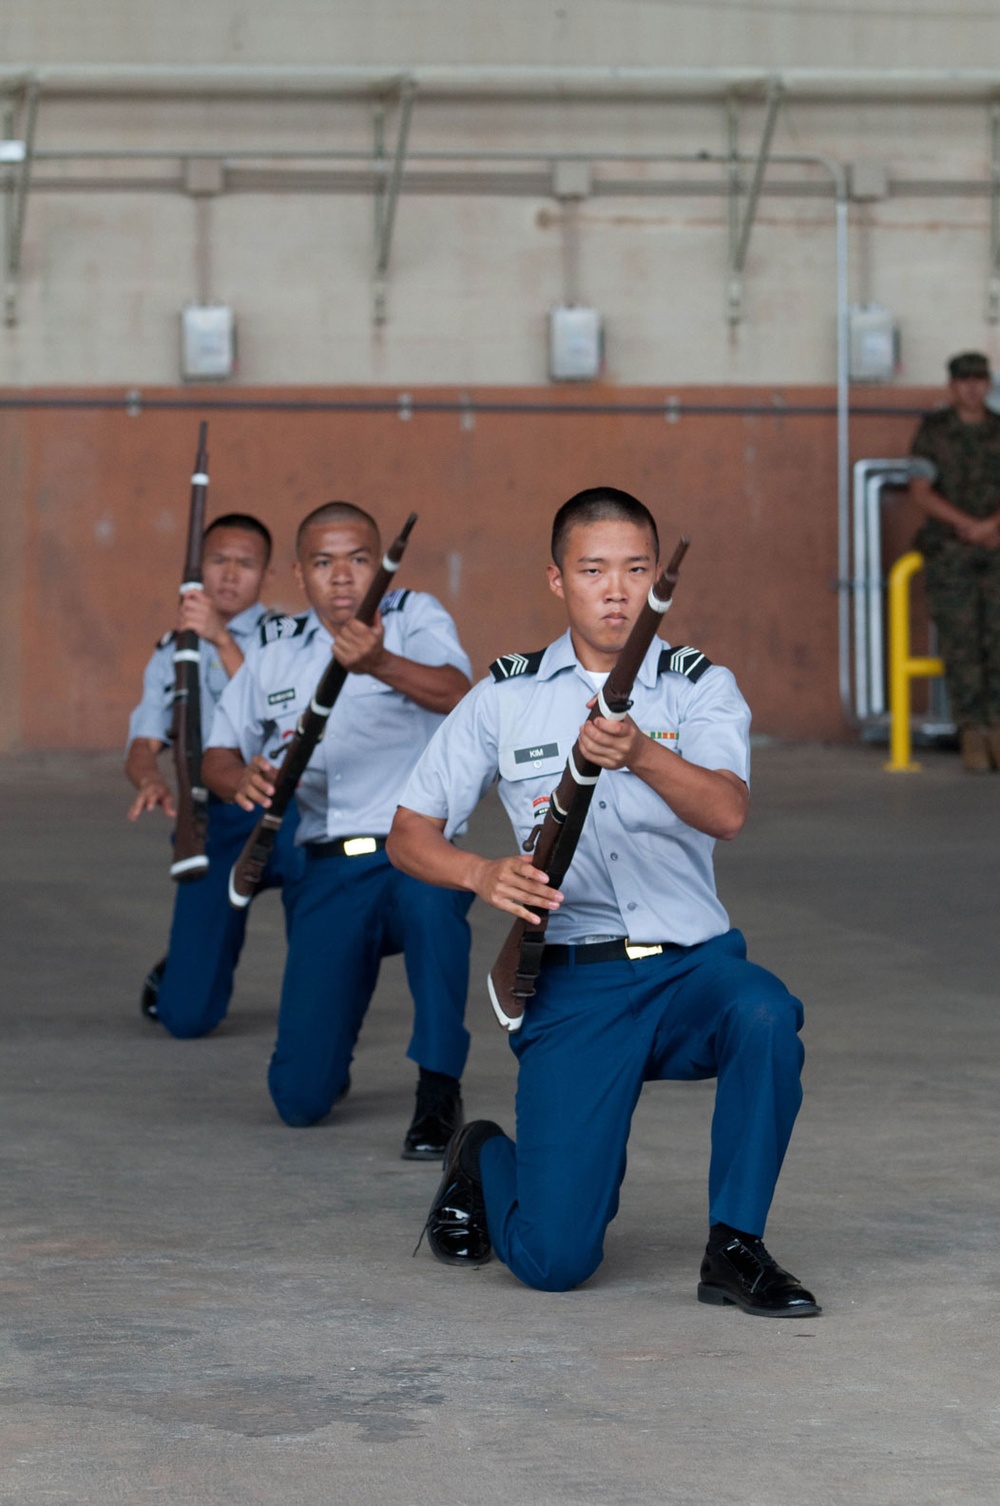 JROTC cadets showcase drill competition skills